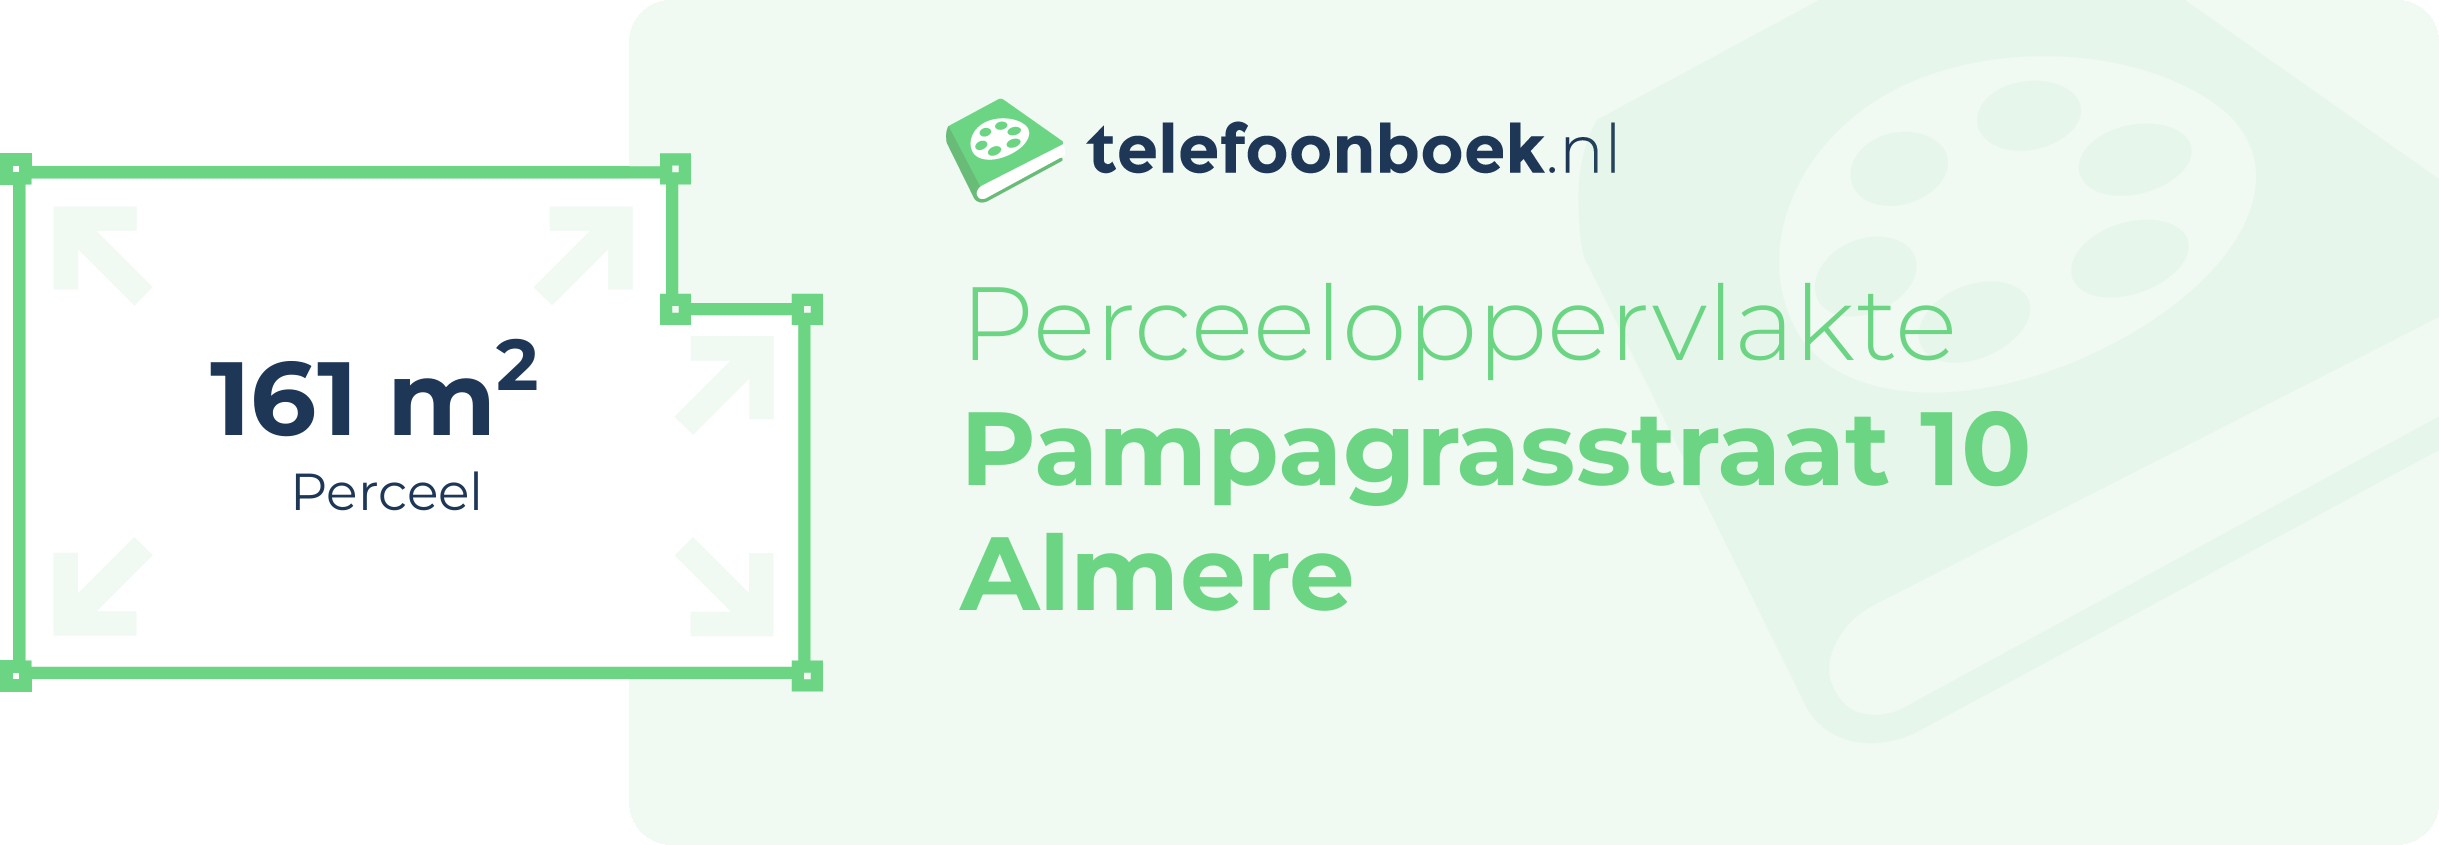 Perceeloppervlakte Pampagrasstraat 10 Almere